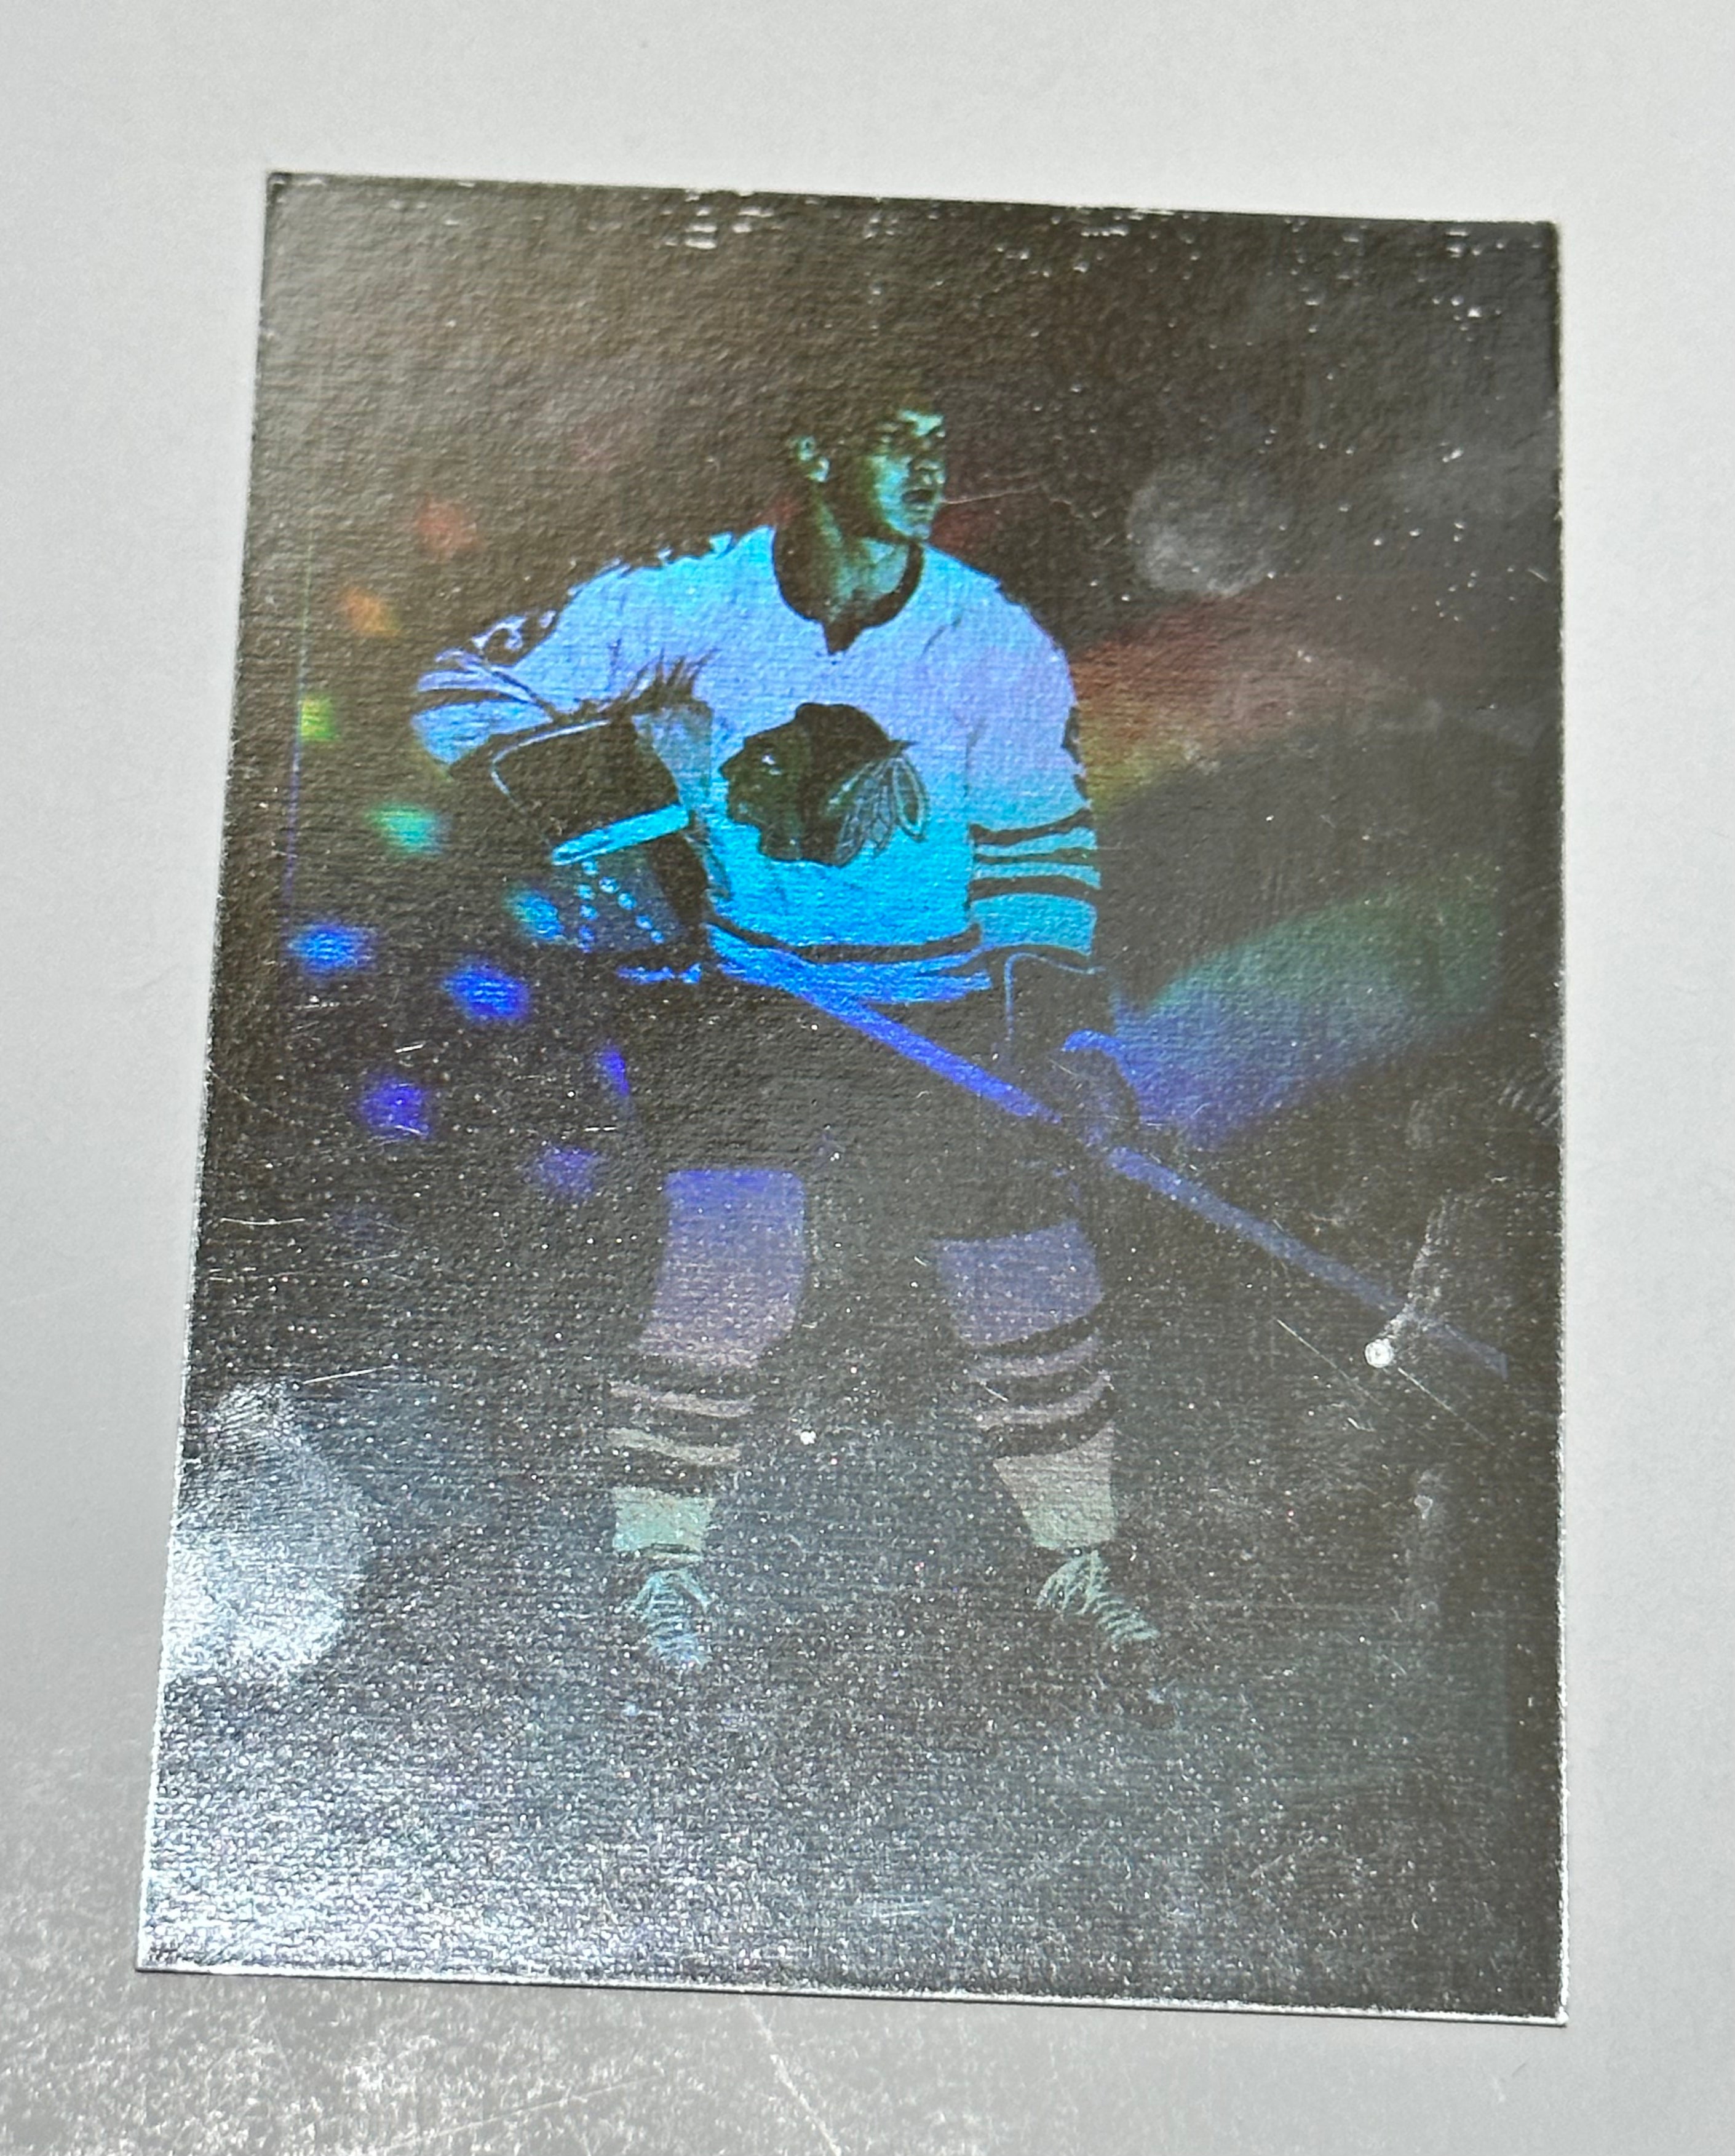 Bobby Hull hologram numbered hockey card